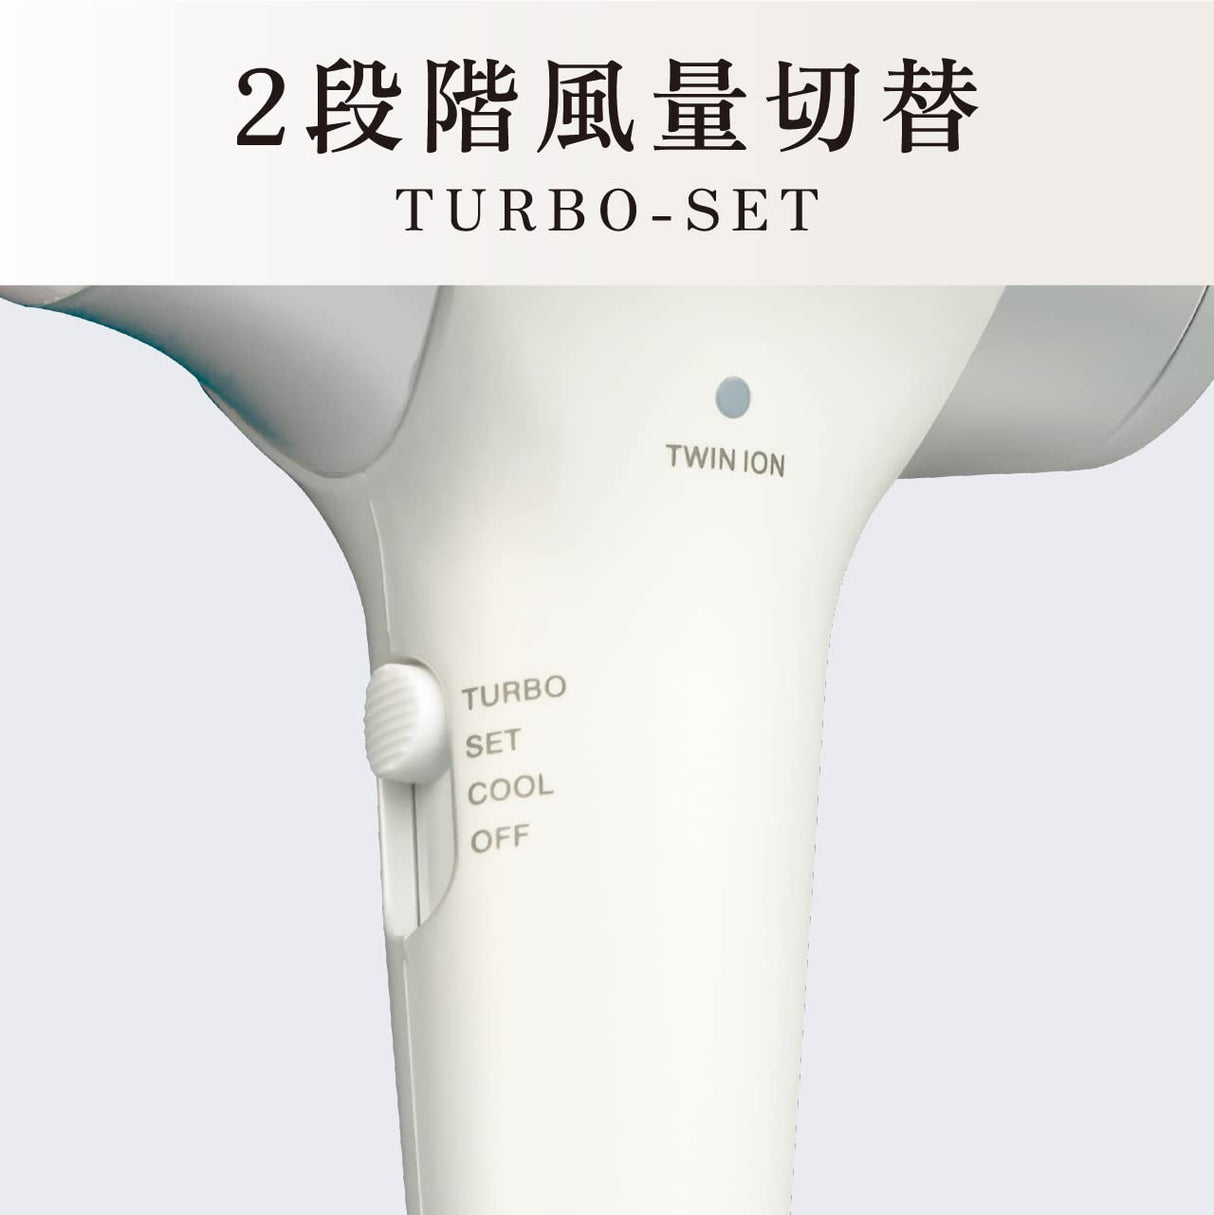 Koizumi KHD-9740/W Hair Dryer, Negative Ions, Light Jobe, Large Airflow, Lightweight, Quick Drying, Compact, White